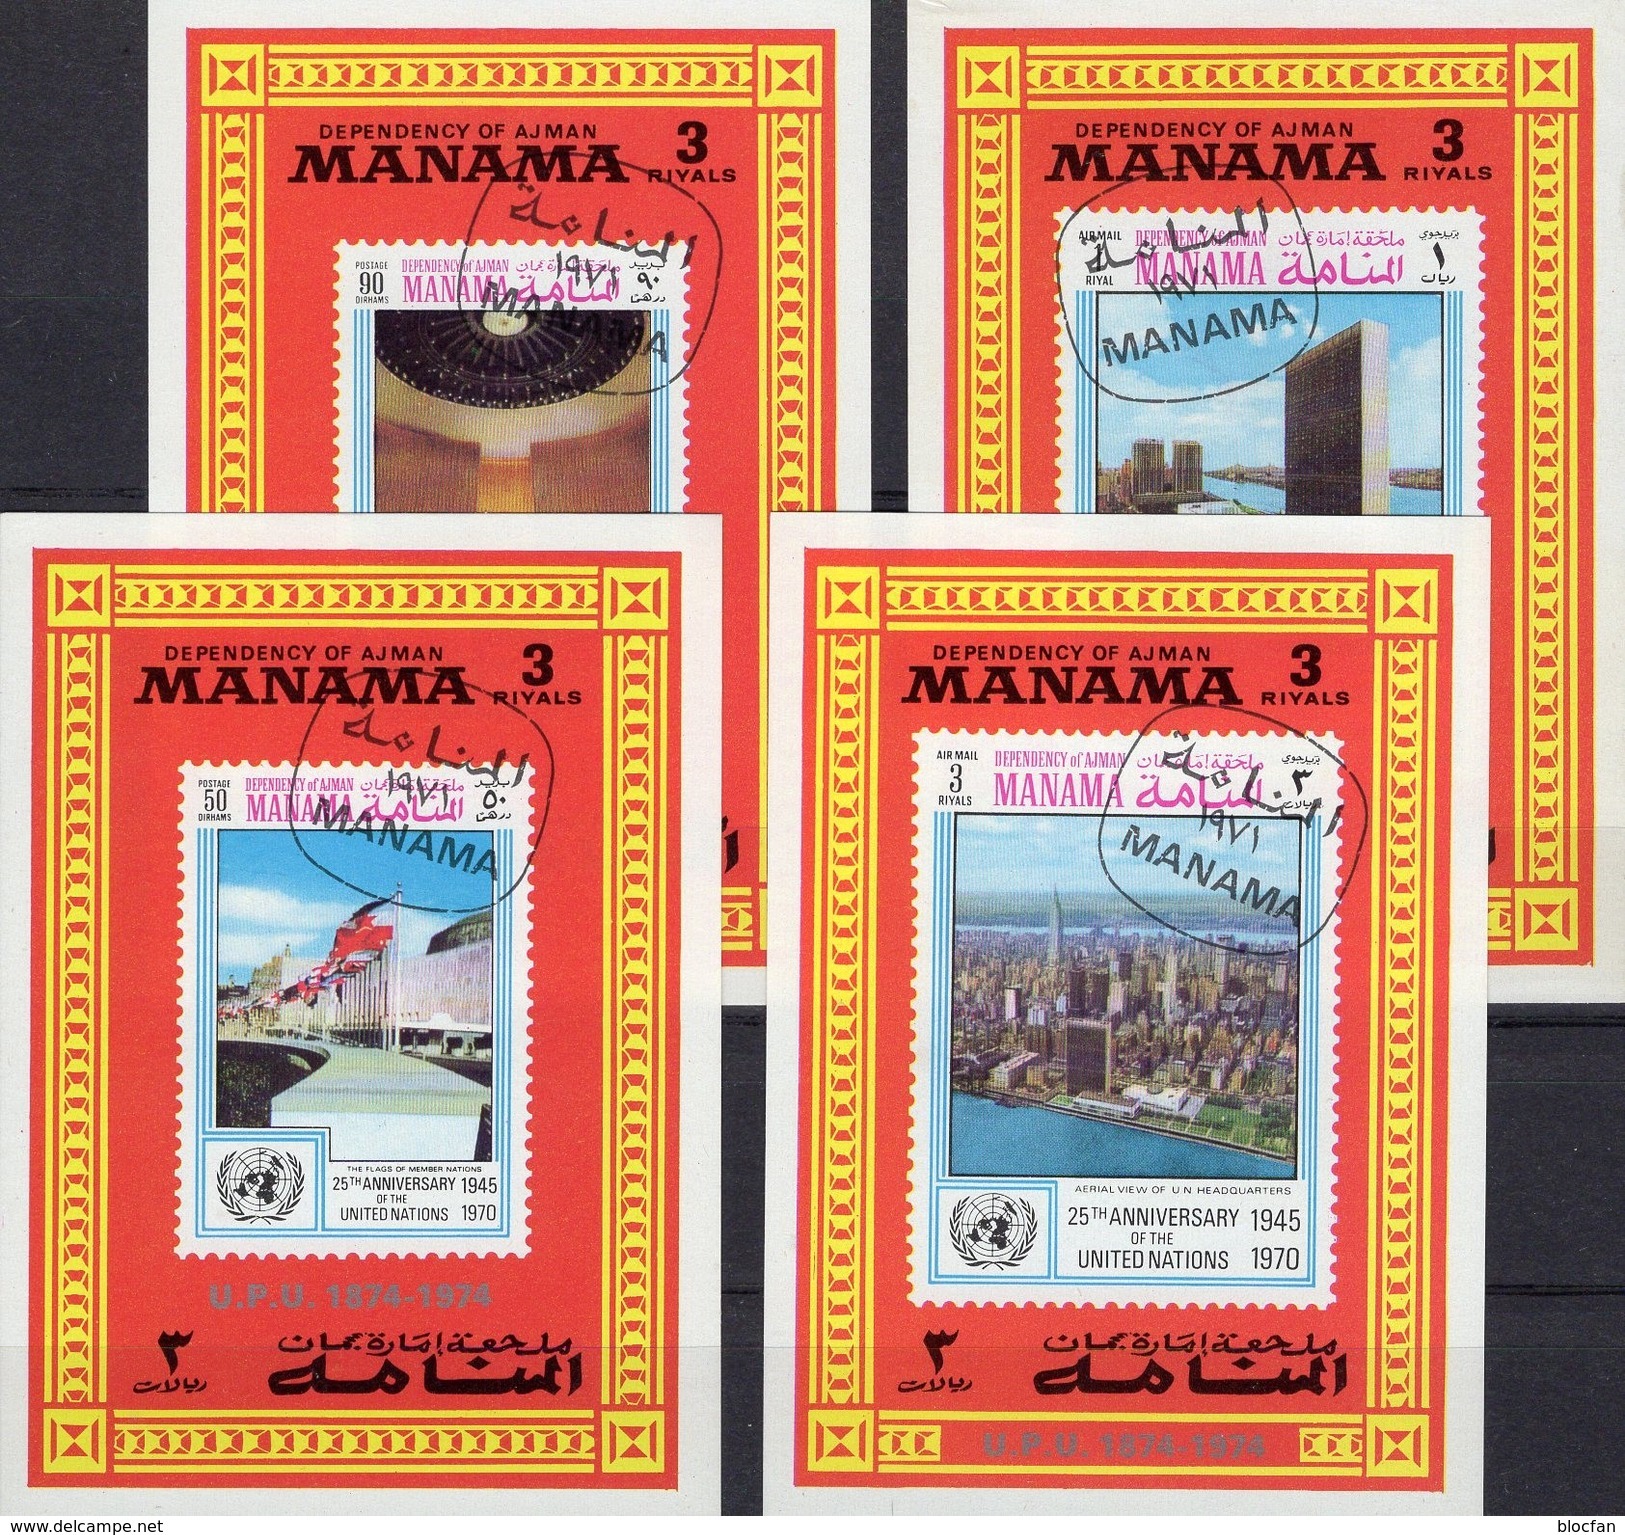 Flaggen UN New York 1971 Ajman/Manama Block A-D107 O 16€ 25 Jahre UNO Hojita Ss Blocs Flag Sheets Ms Bf Architectur - Stamps